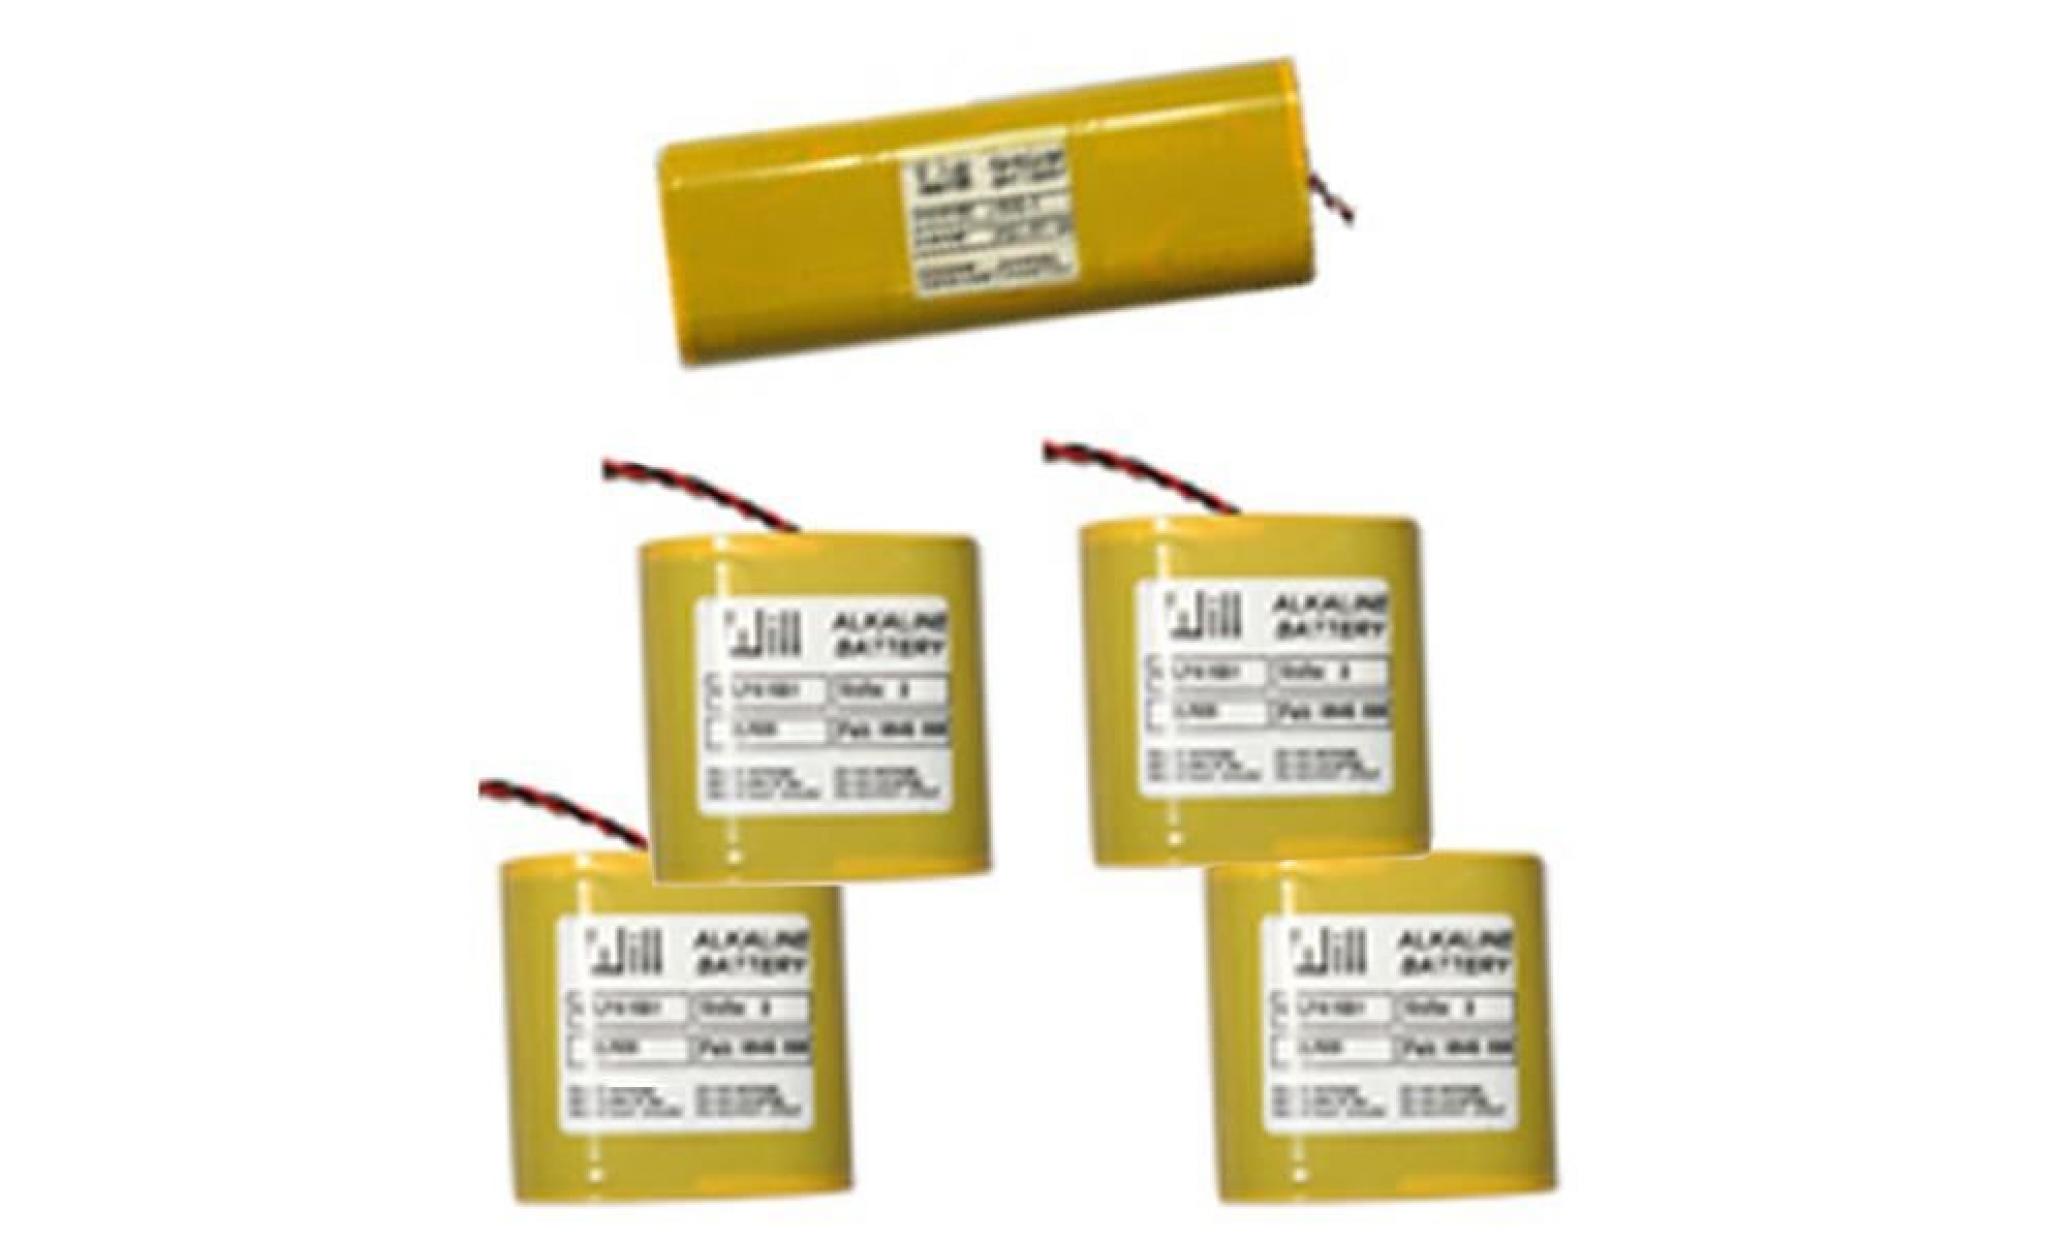 batteries d'origine 1x9v et 4x3v 18a/h pour alarme primaprotect